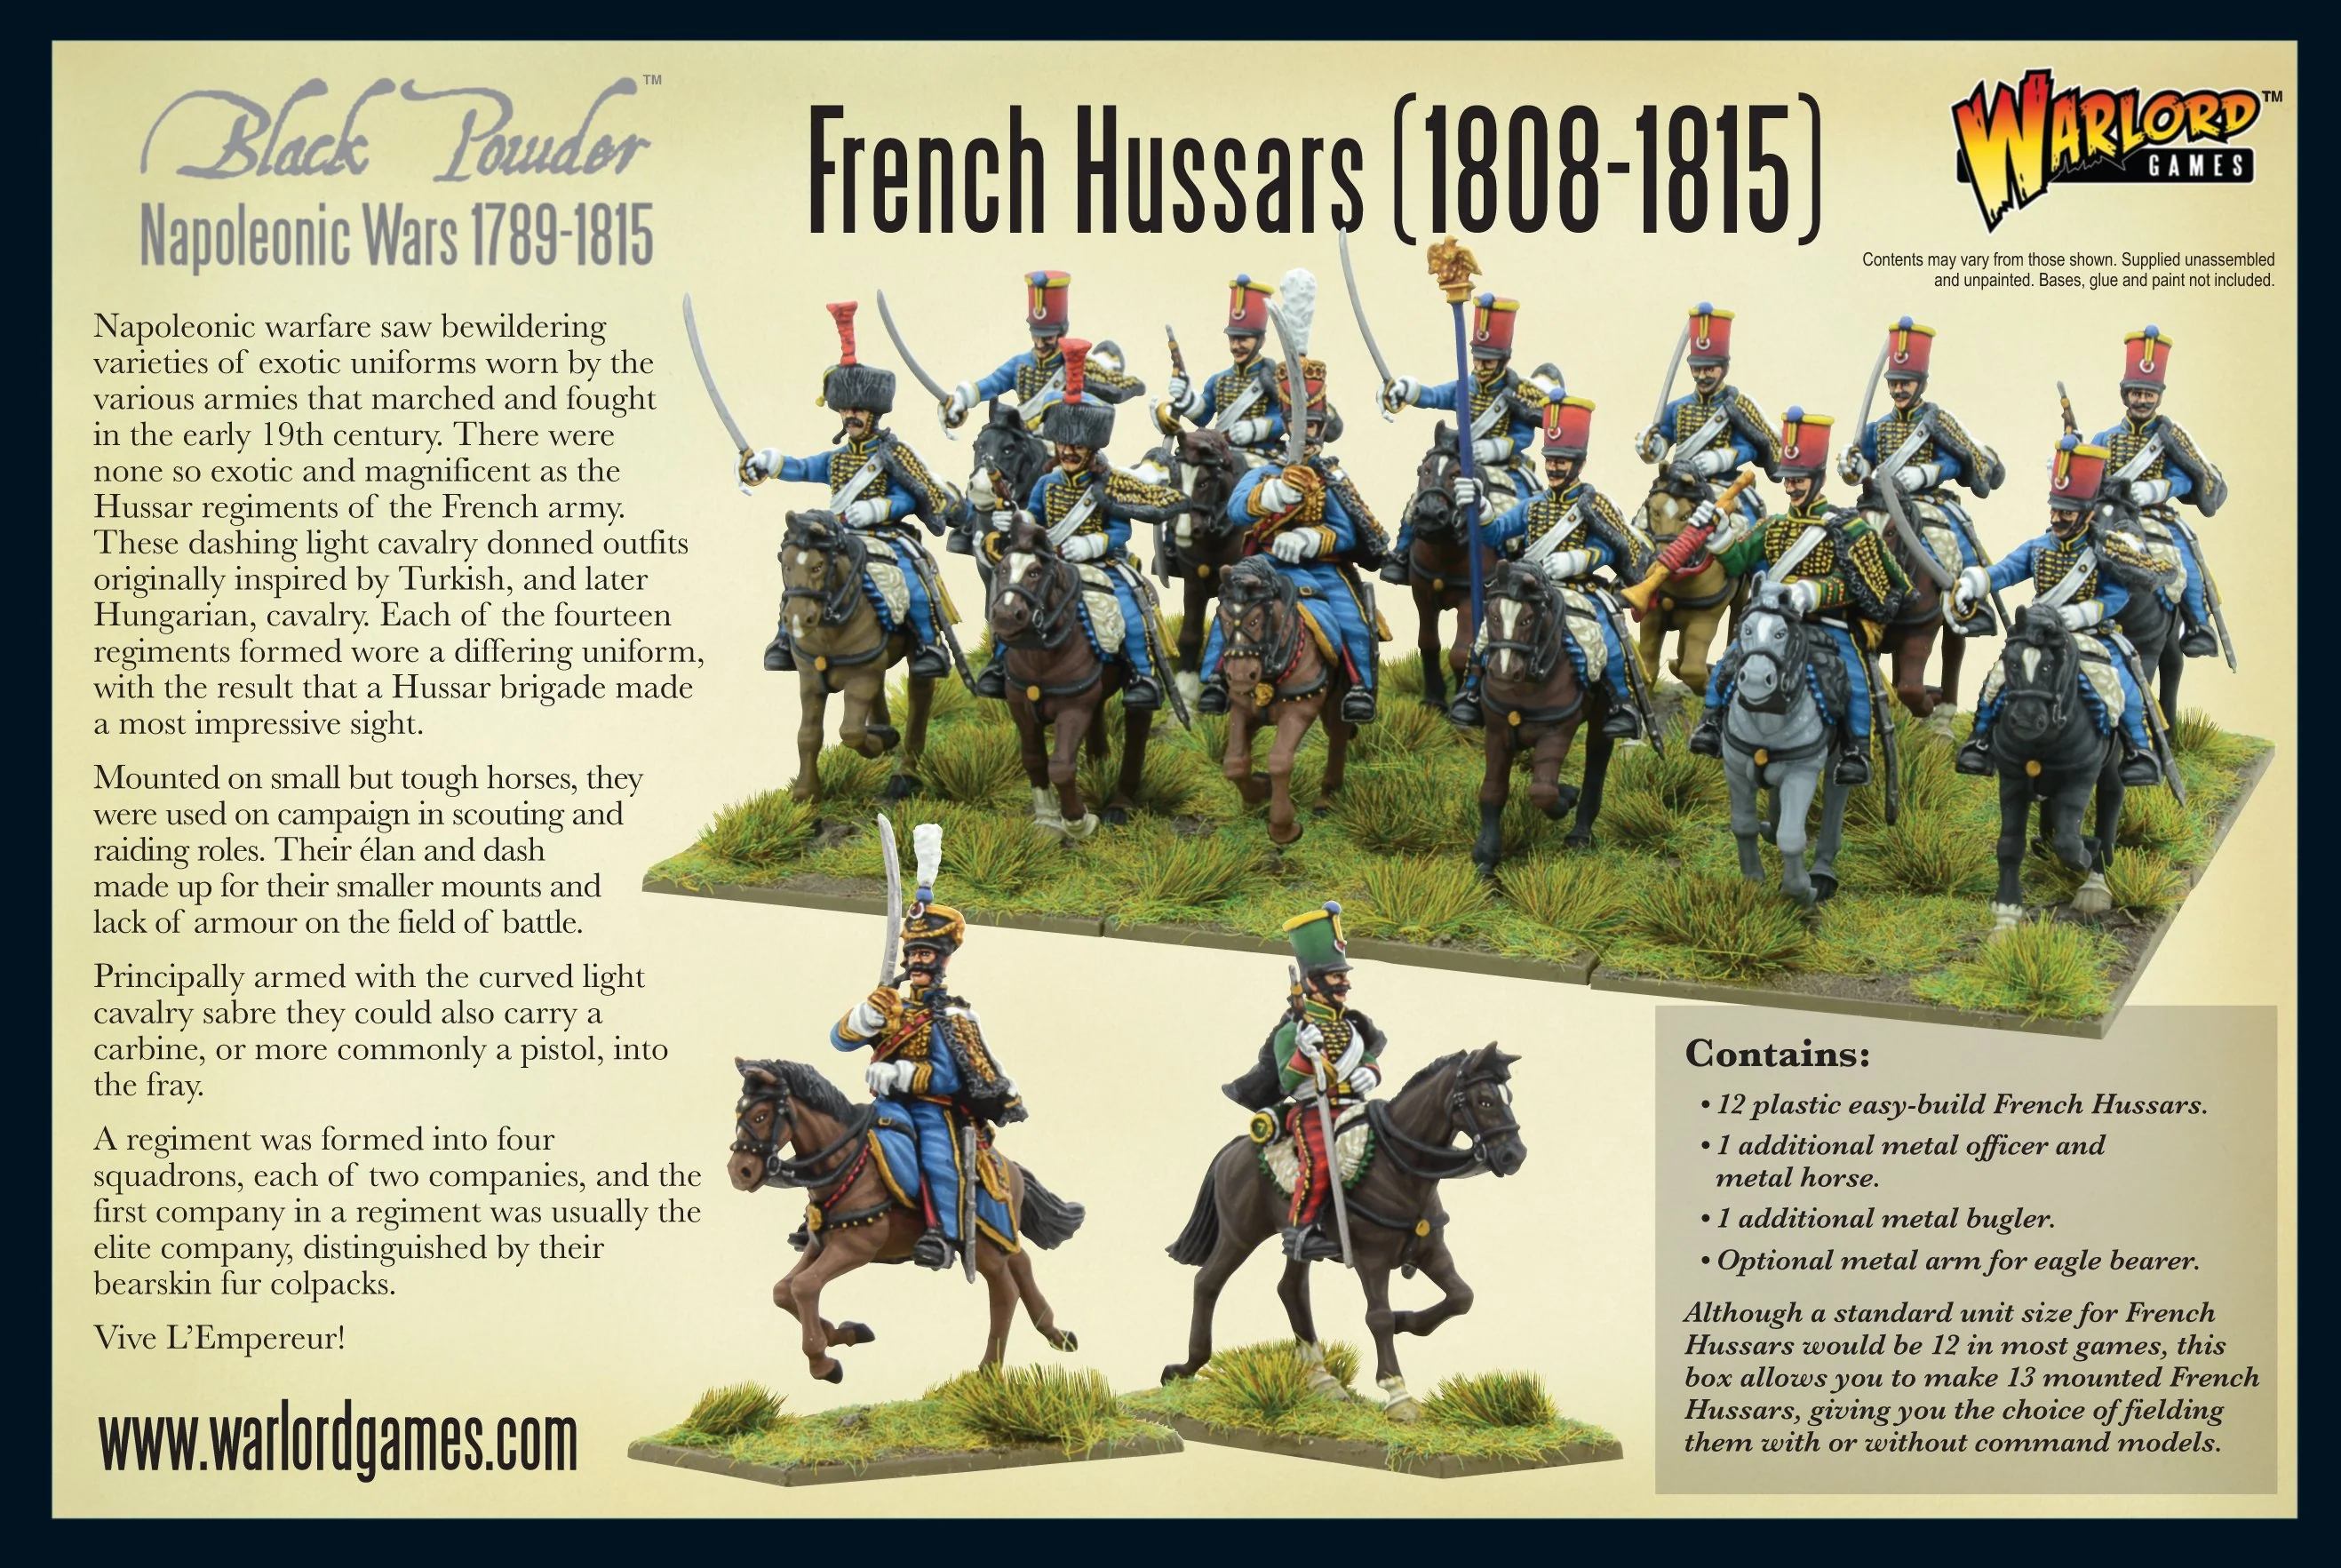 French Hussars-1711122835-xAHnm.webp